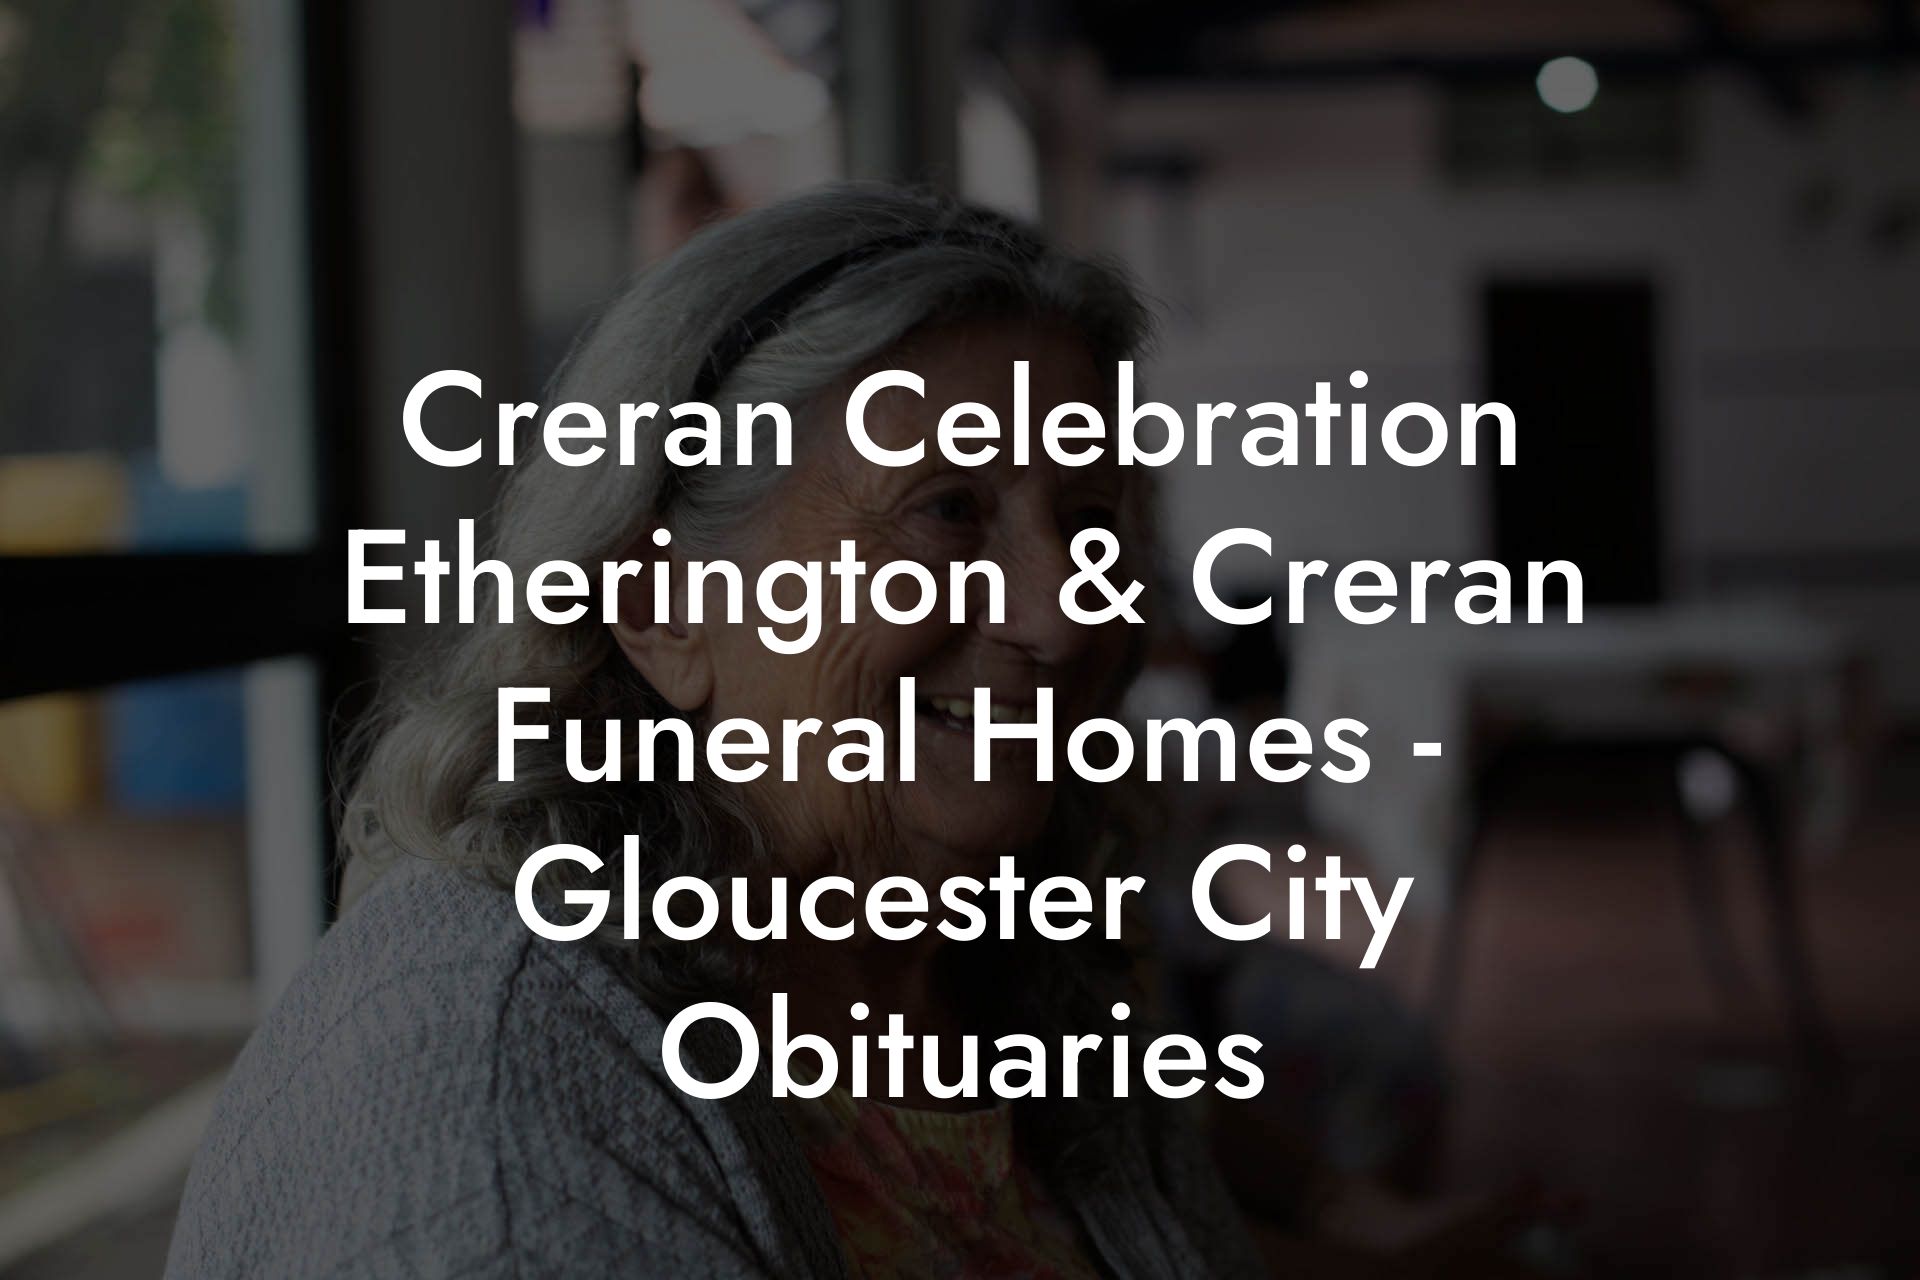 Creran Celebration Etherington & Creran Funeral Homes - Gloucester City Obituaries